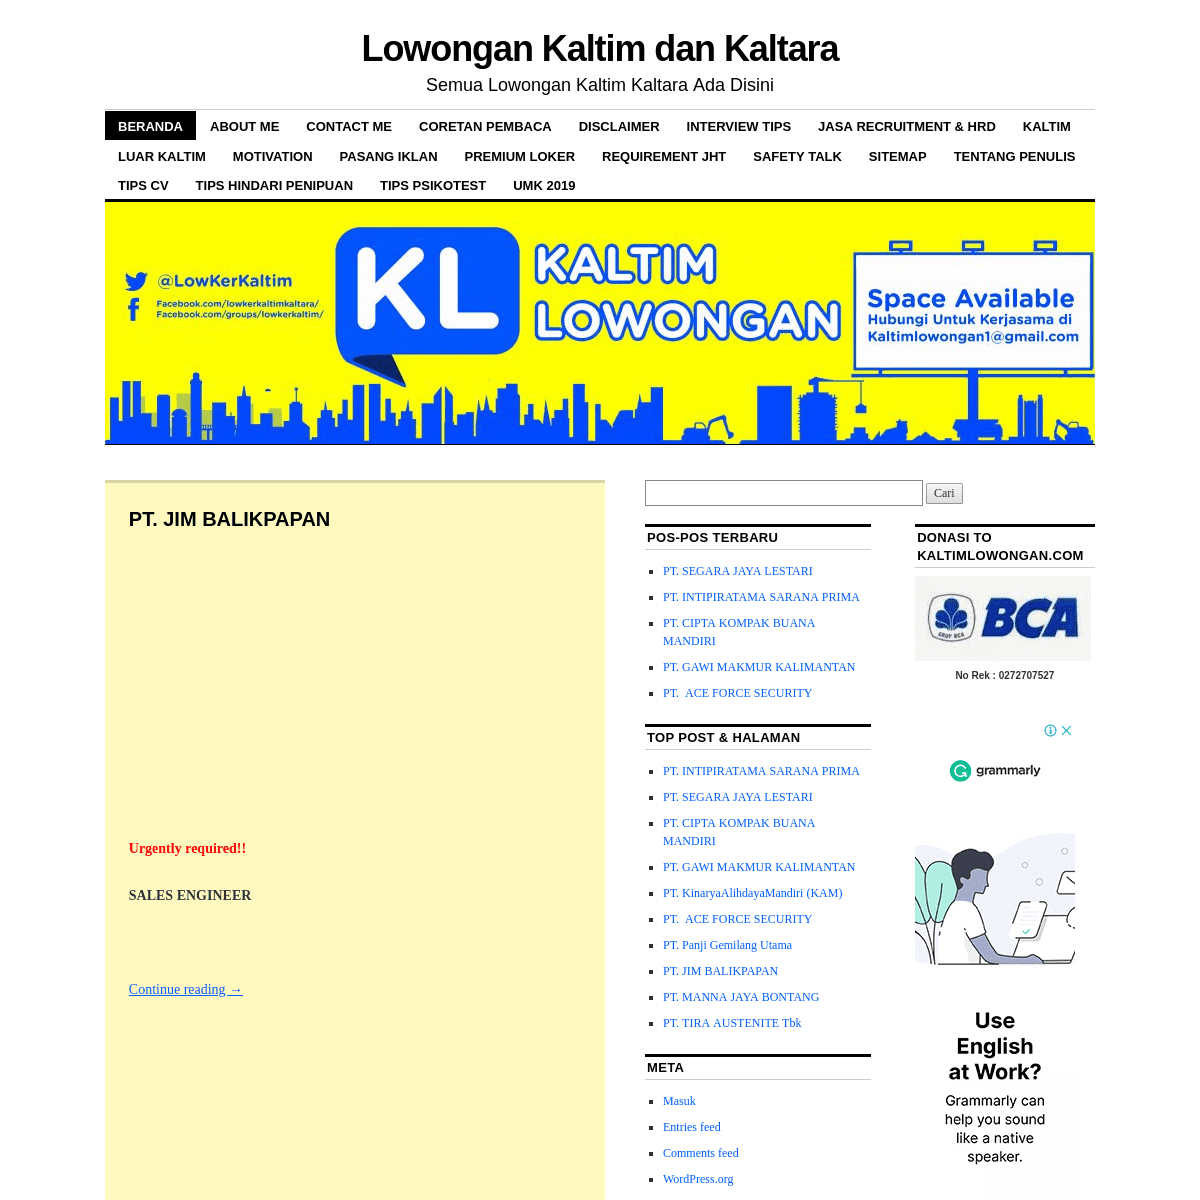 A complete backup of kaltimlowongan.com